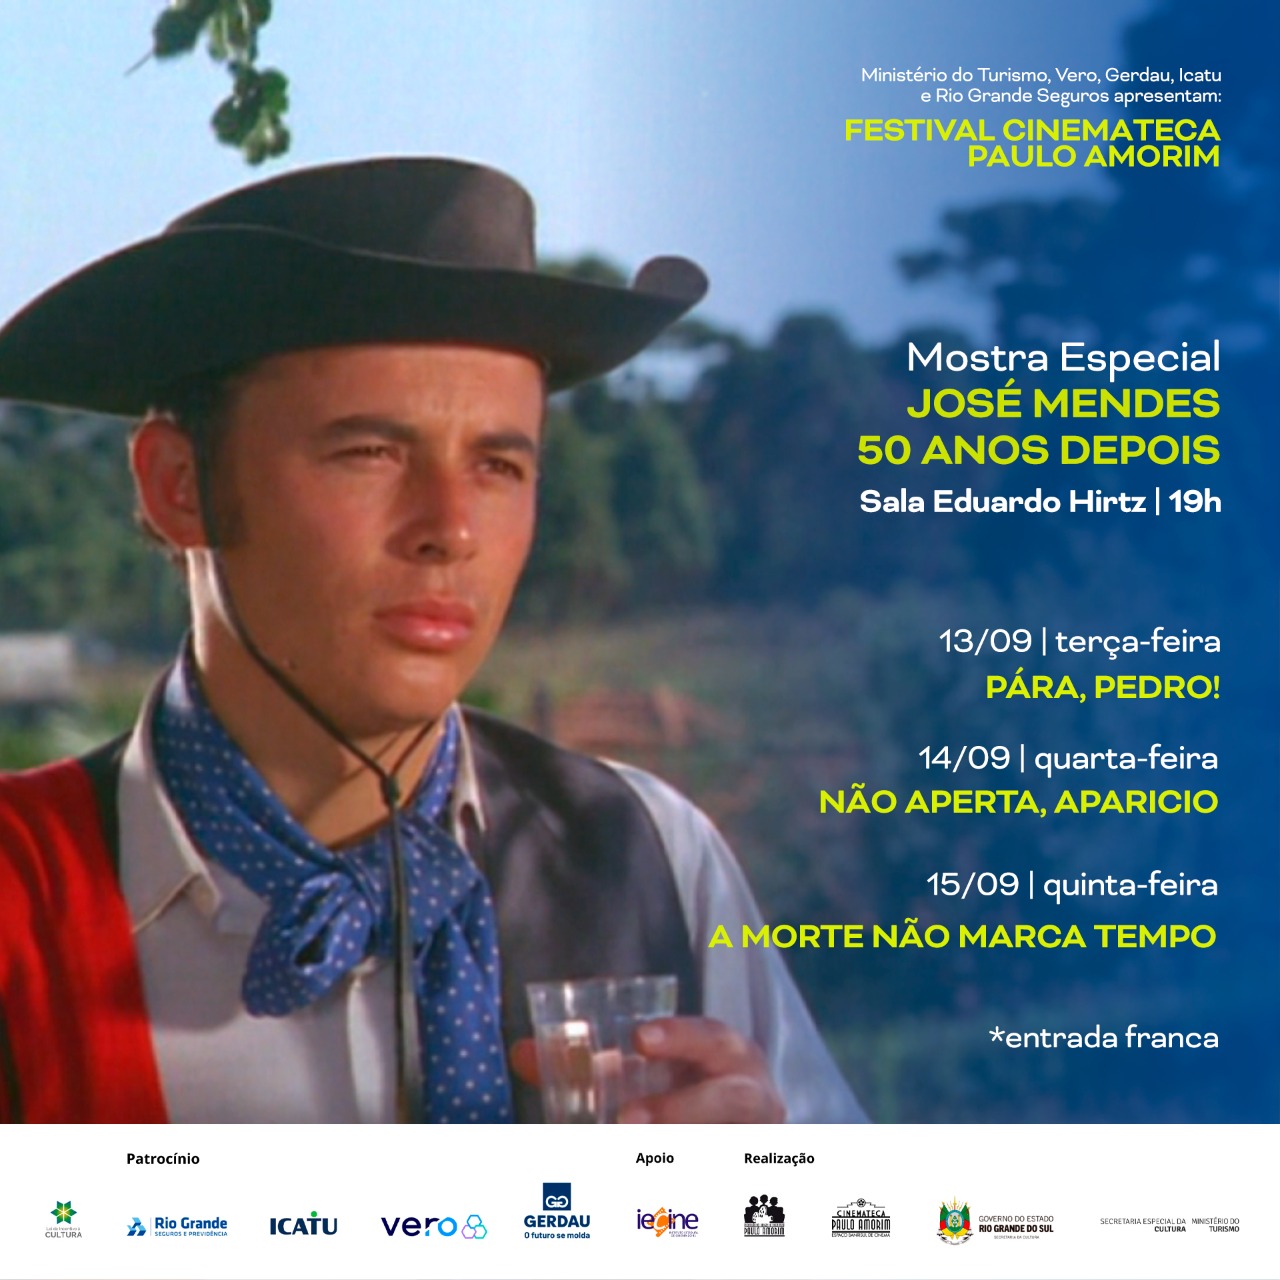 Festival Cinemateca Paulo Amorim - José Mendes 50 anos depois